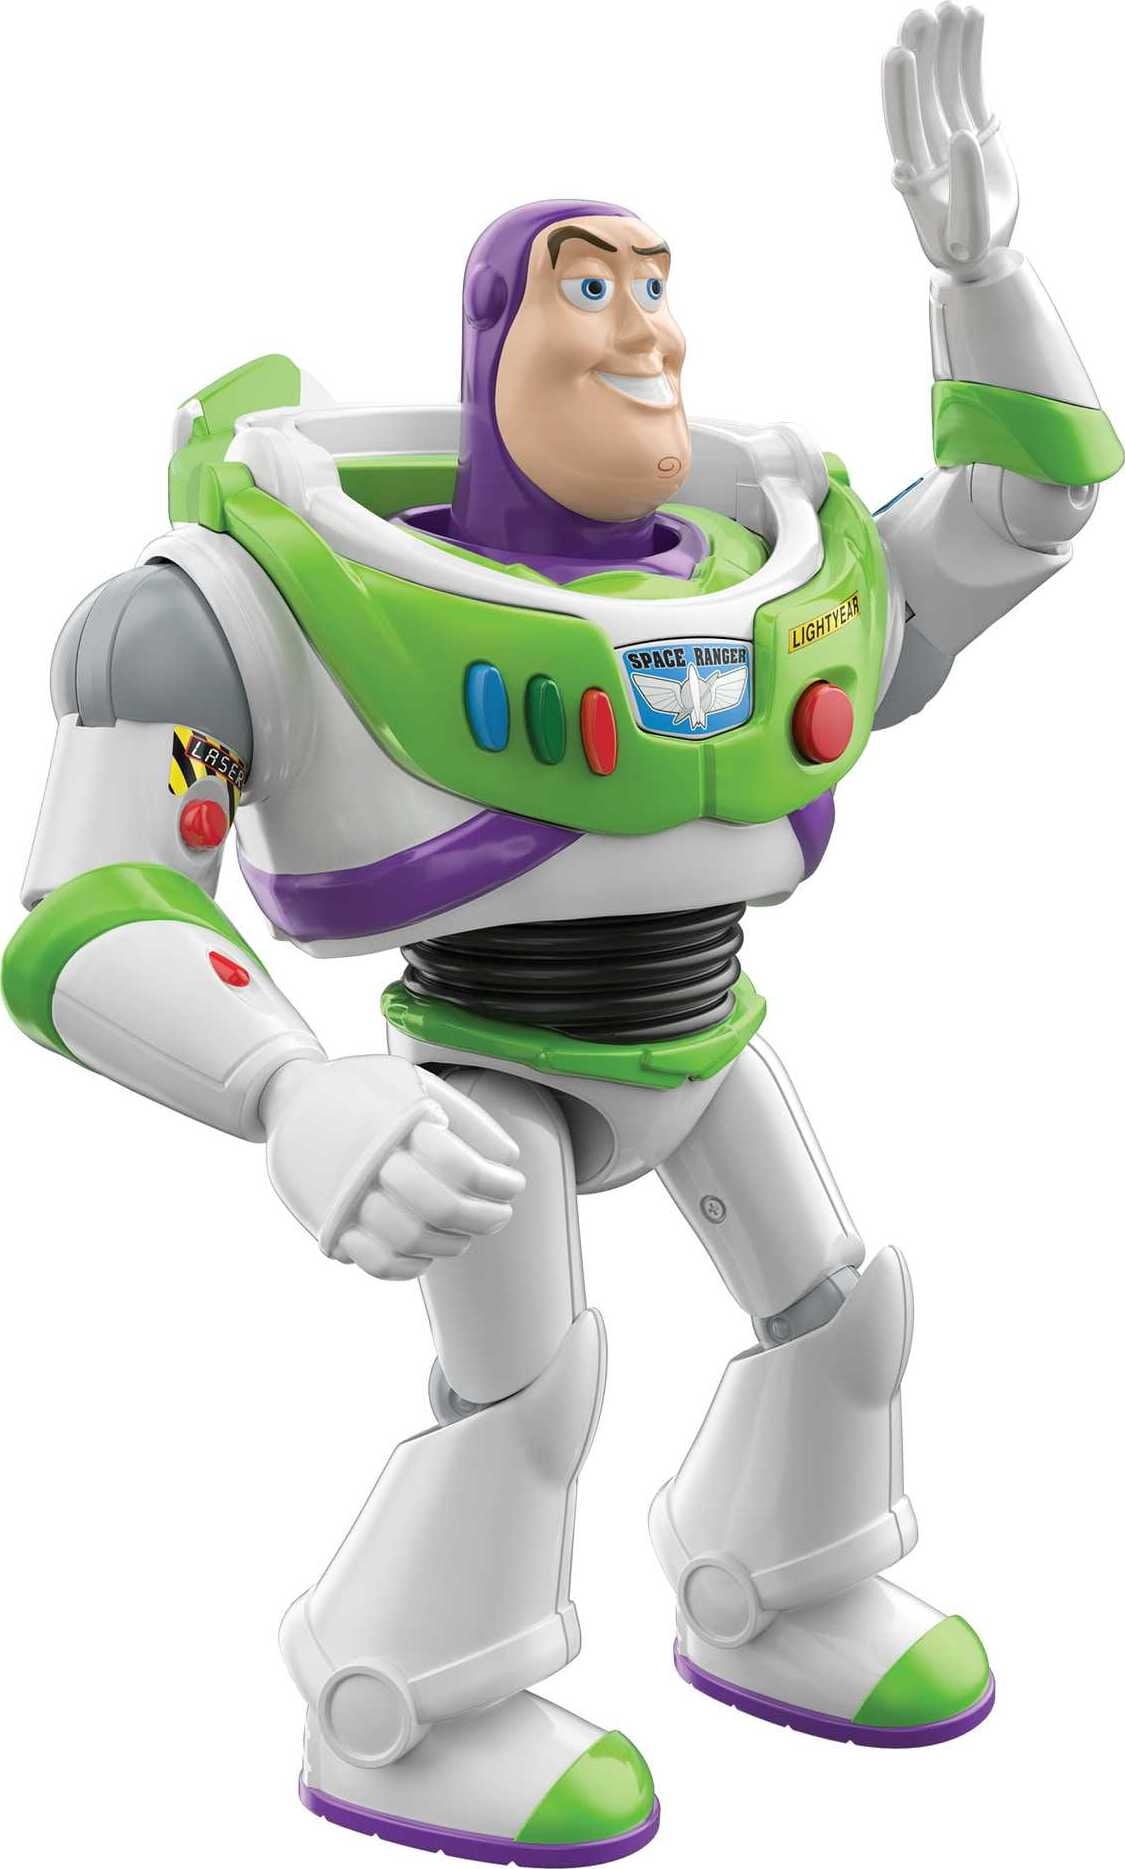 Pixar Toy Story Toys, Buzz Lightyear Interactables Talking Figure -  